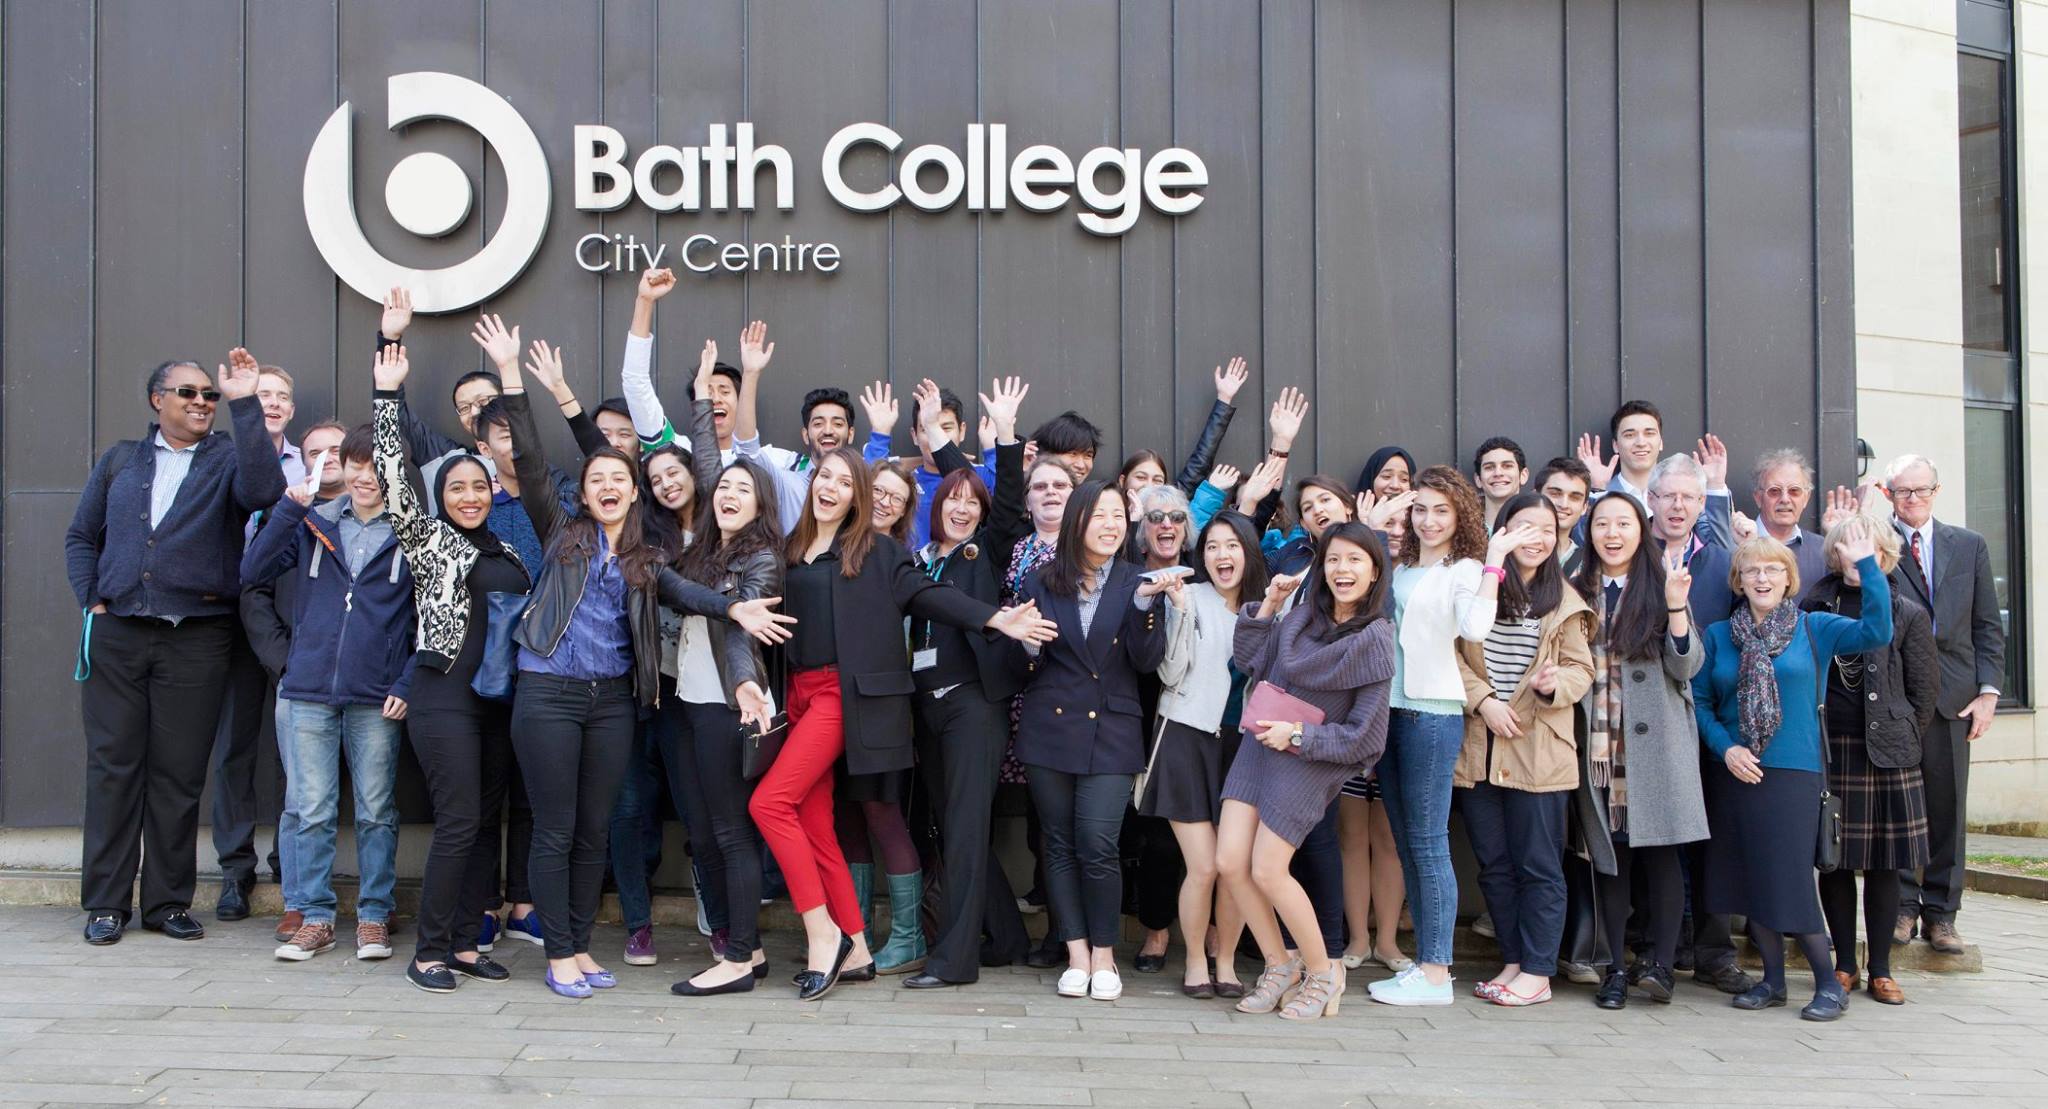 كلية باث – Bath College